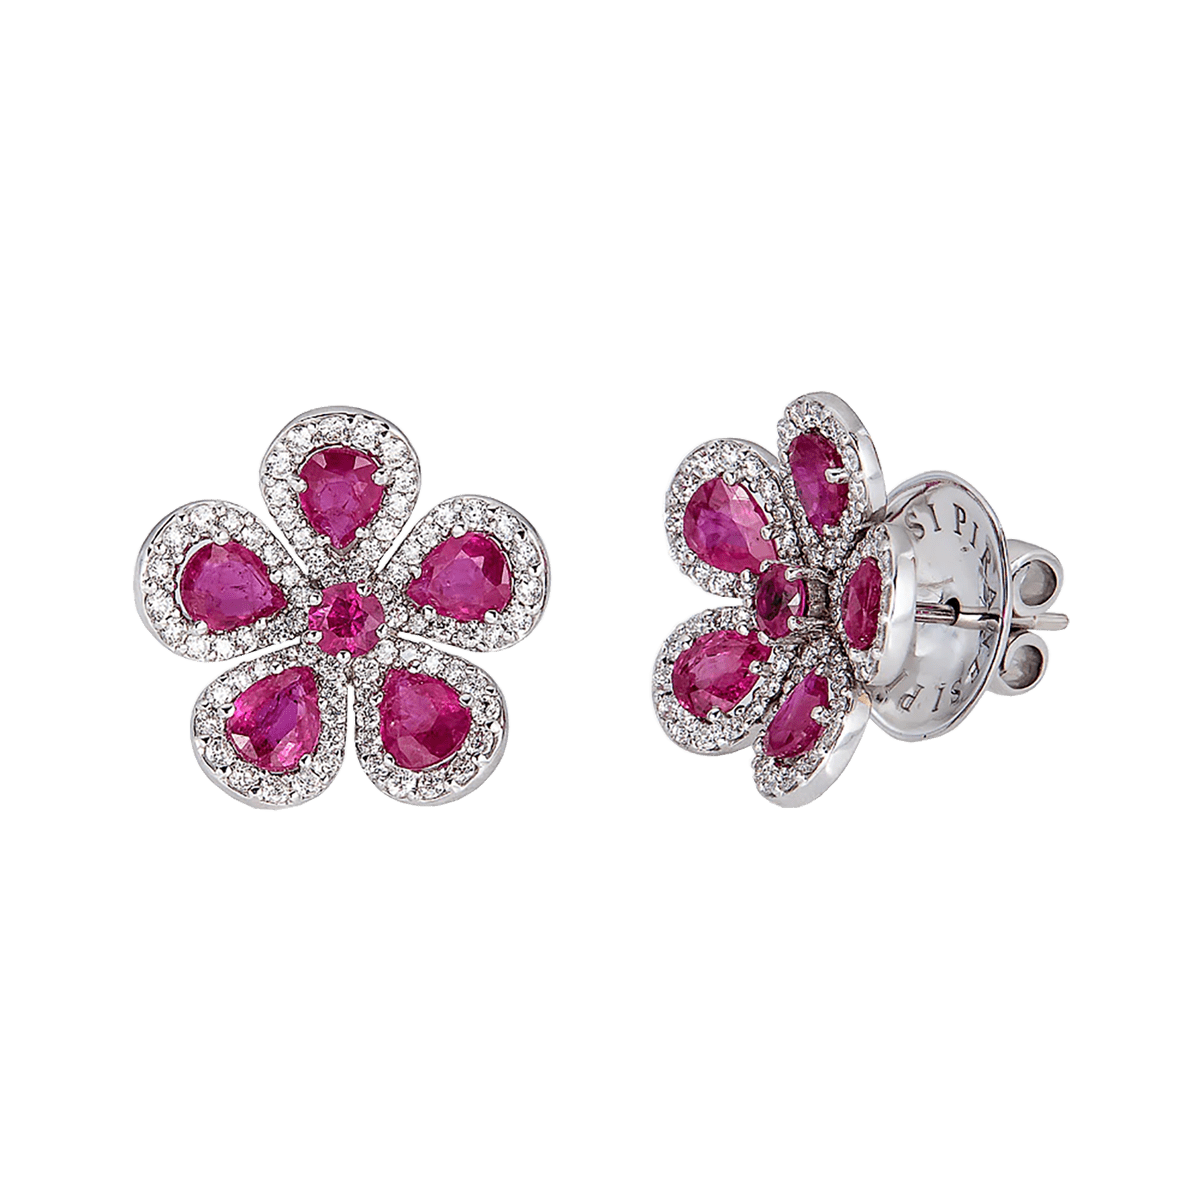 Classic Flower Earrings in Ruby with Diamond